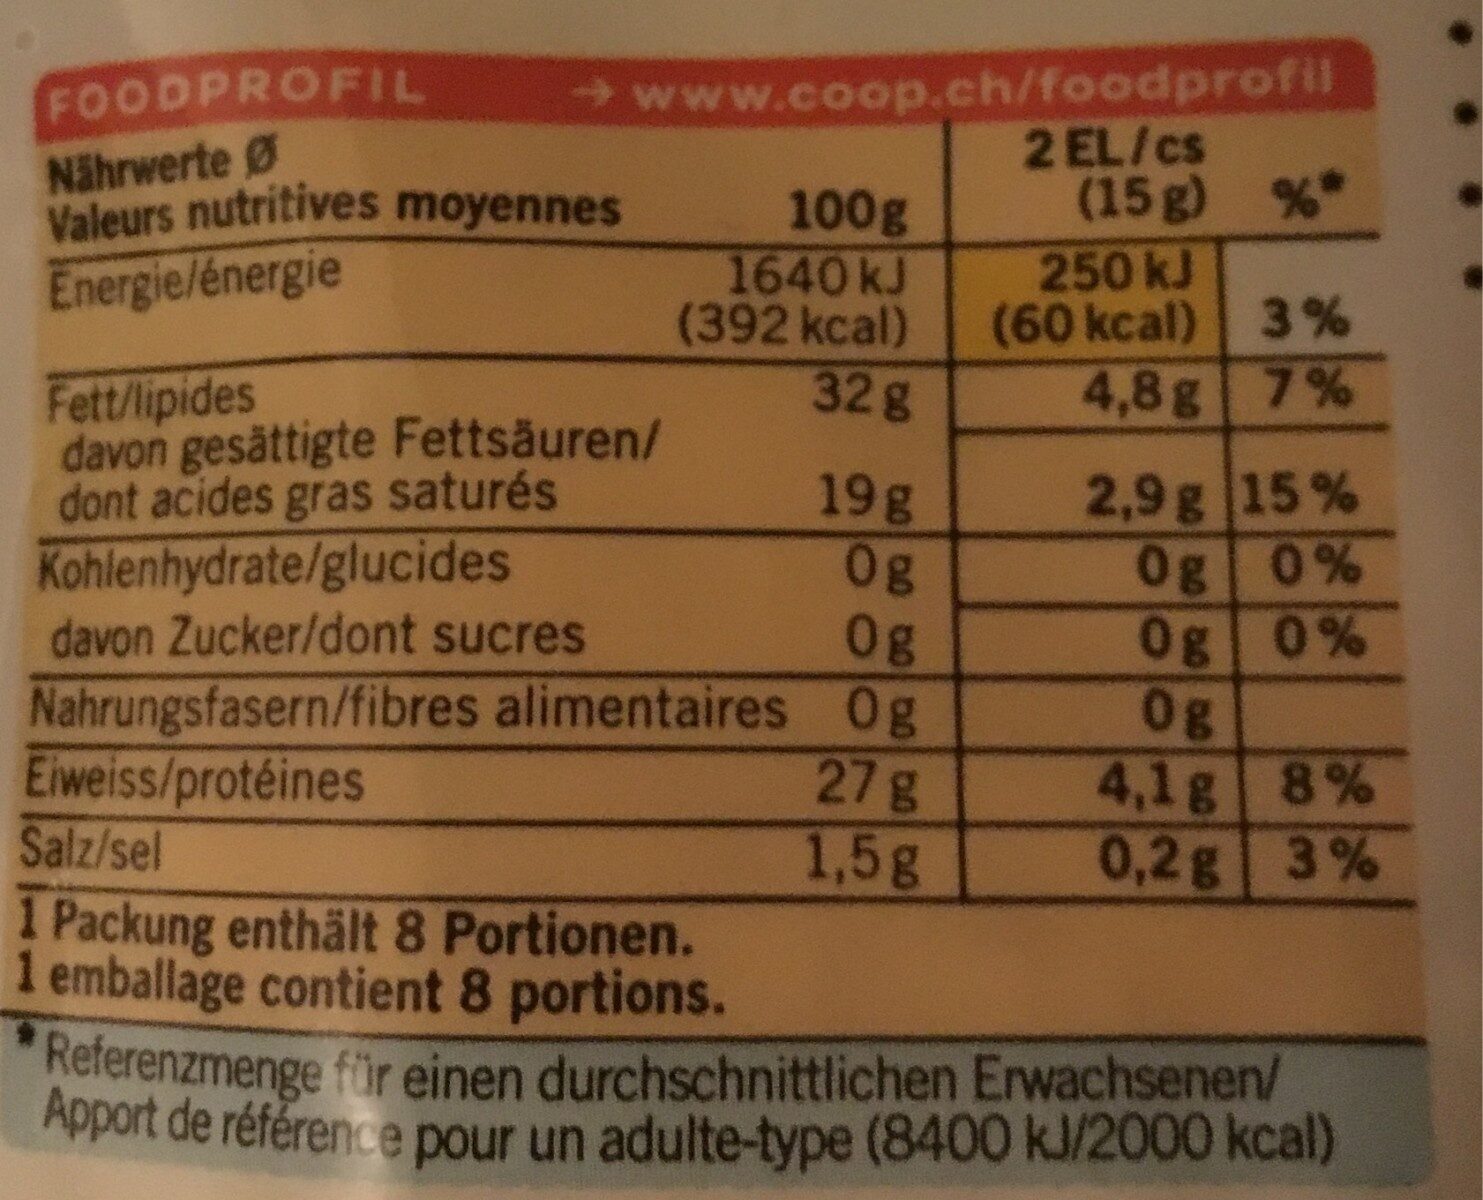 Le gruyère switzerland - Tableau nutritionnel